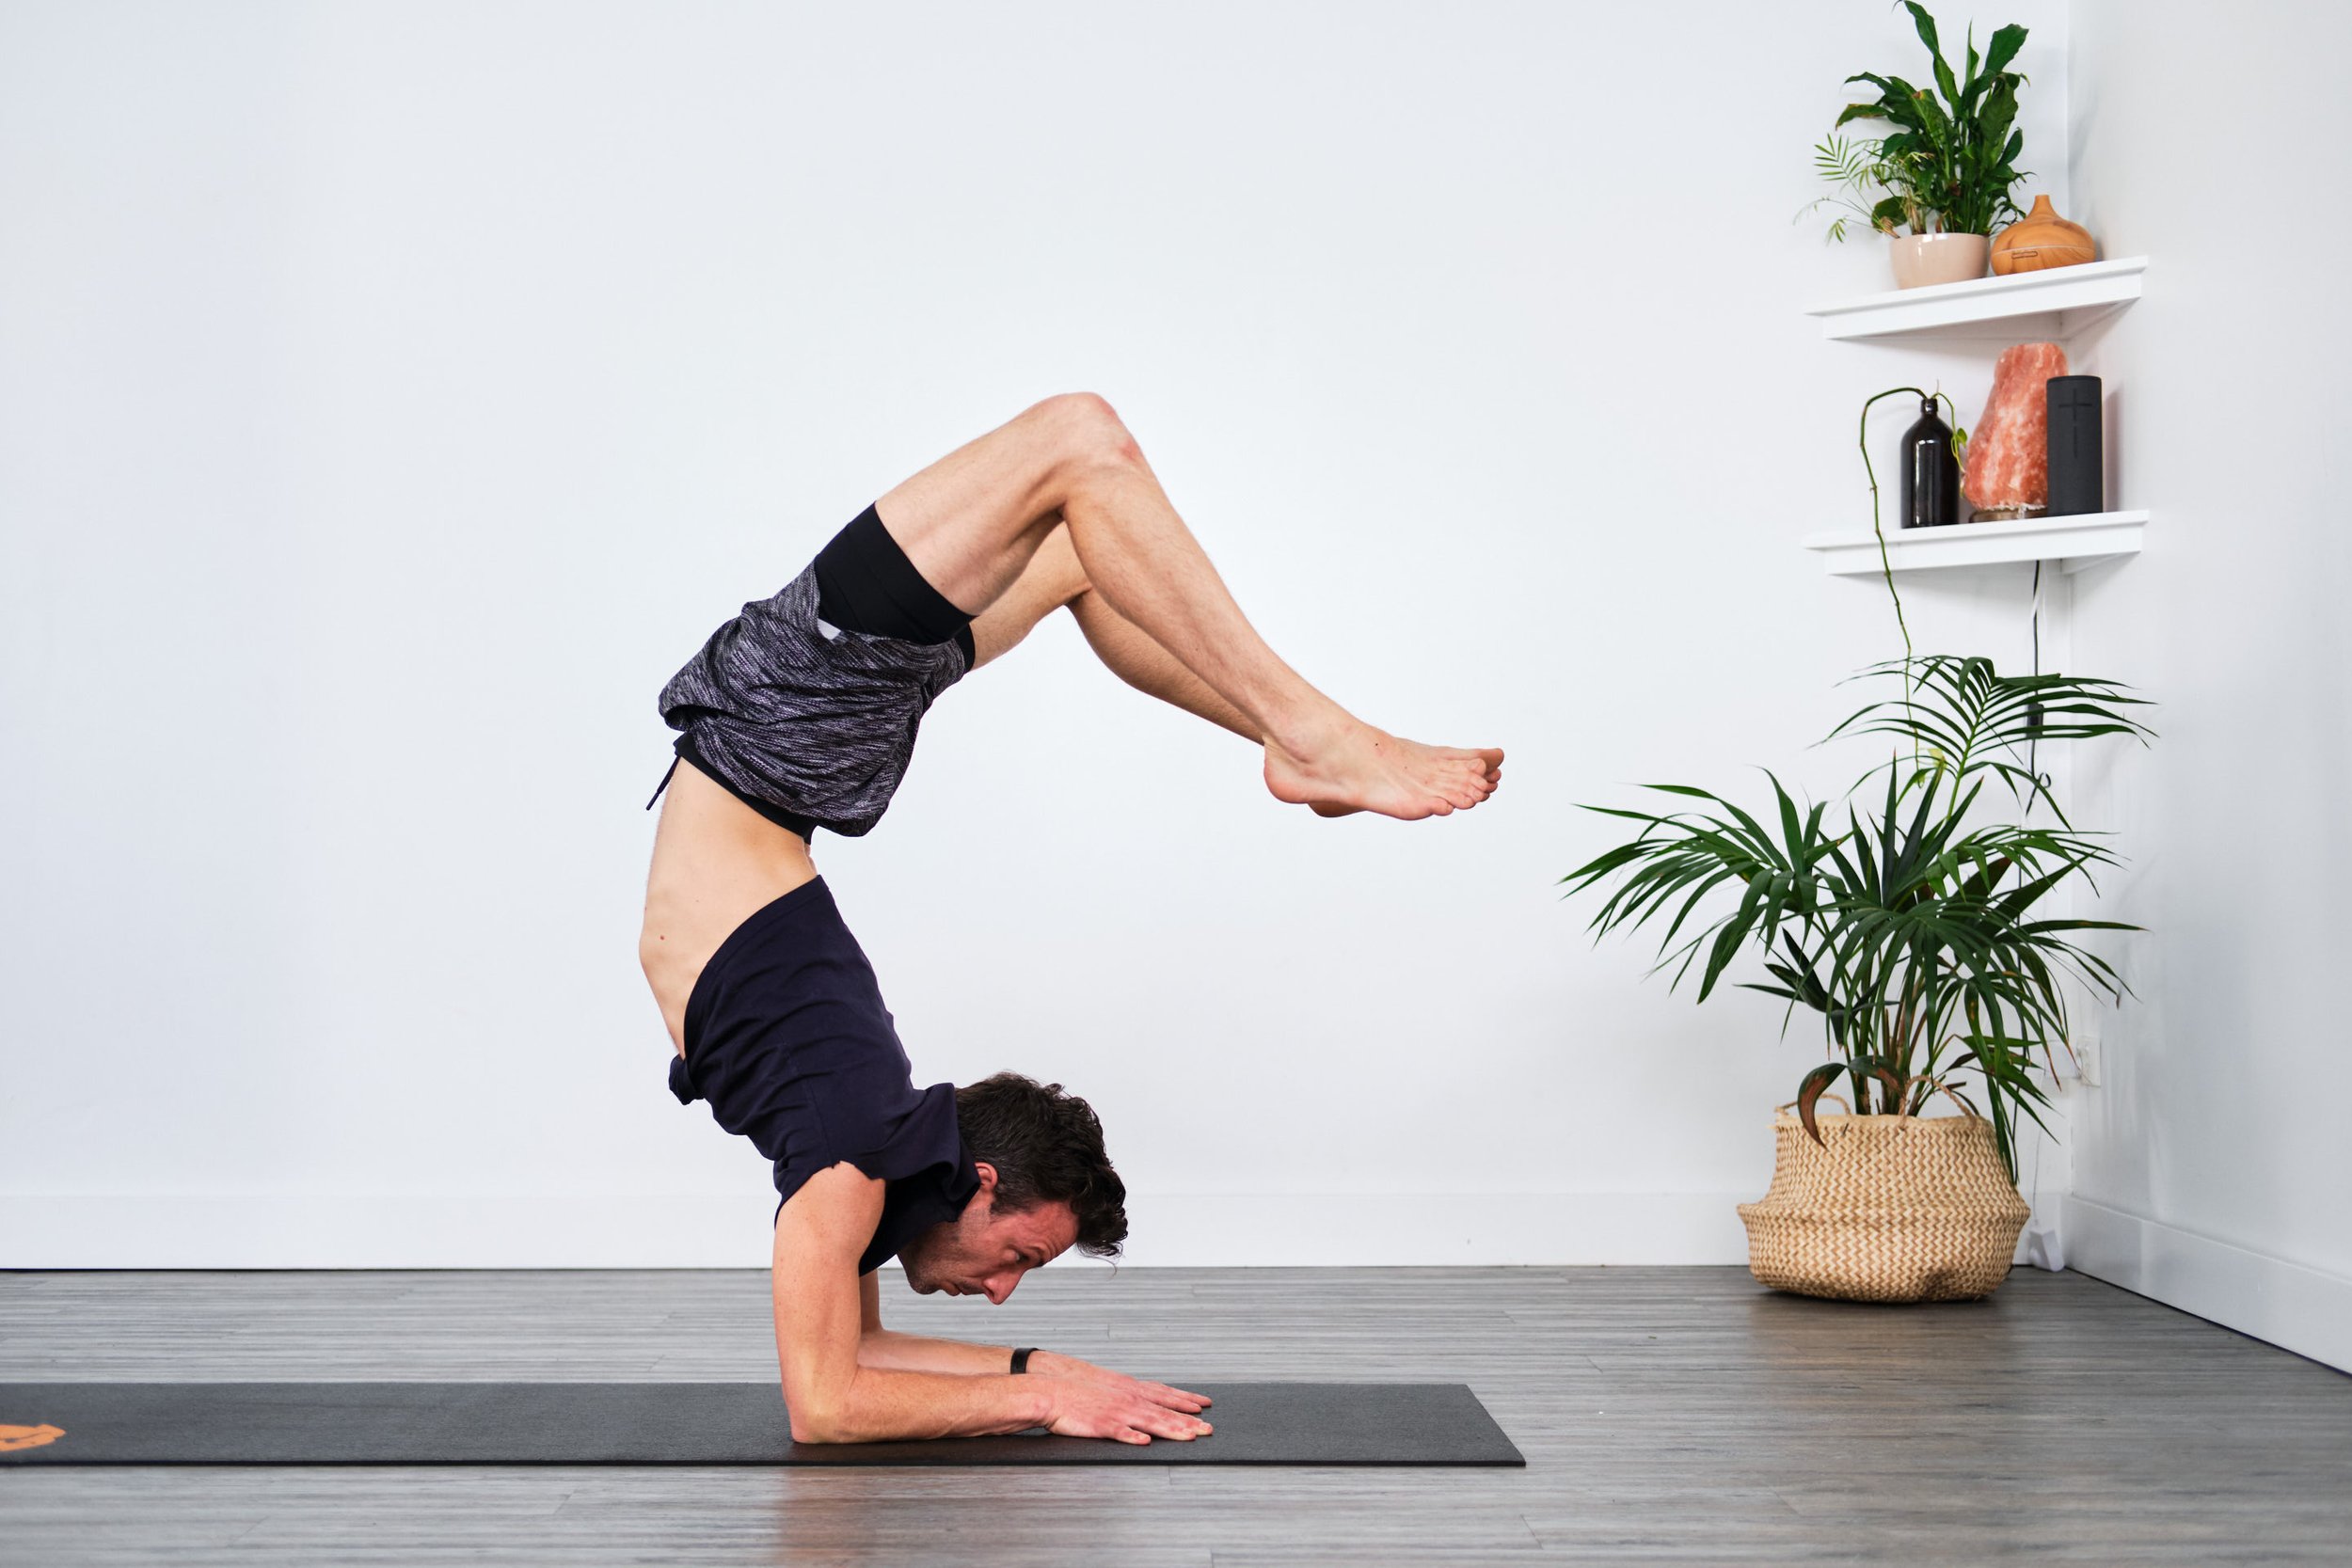 Scorpion Yoga Pose Image & Photo (Free Trial) | Bigstock